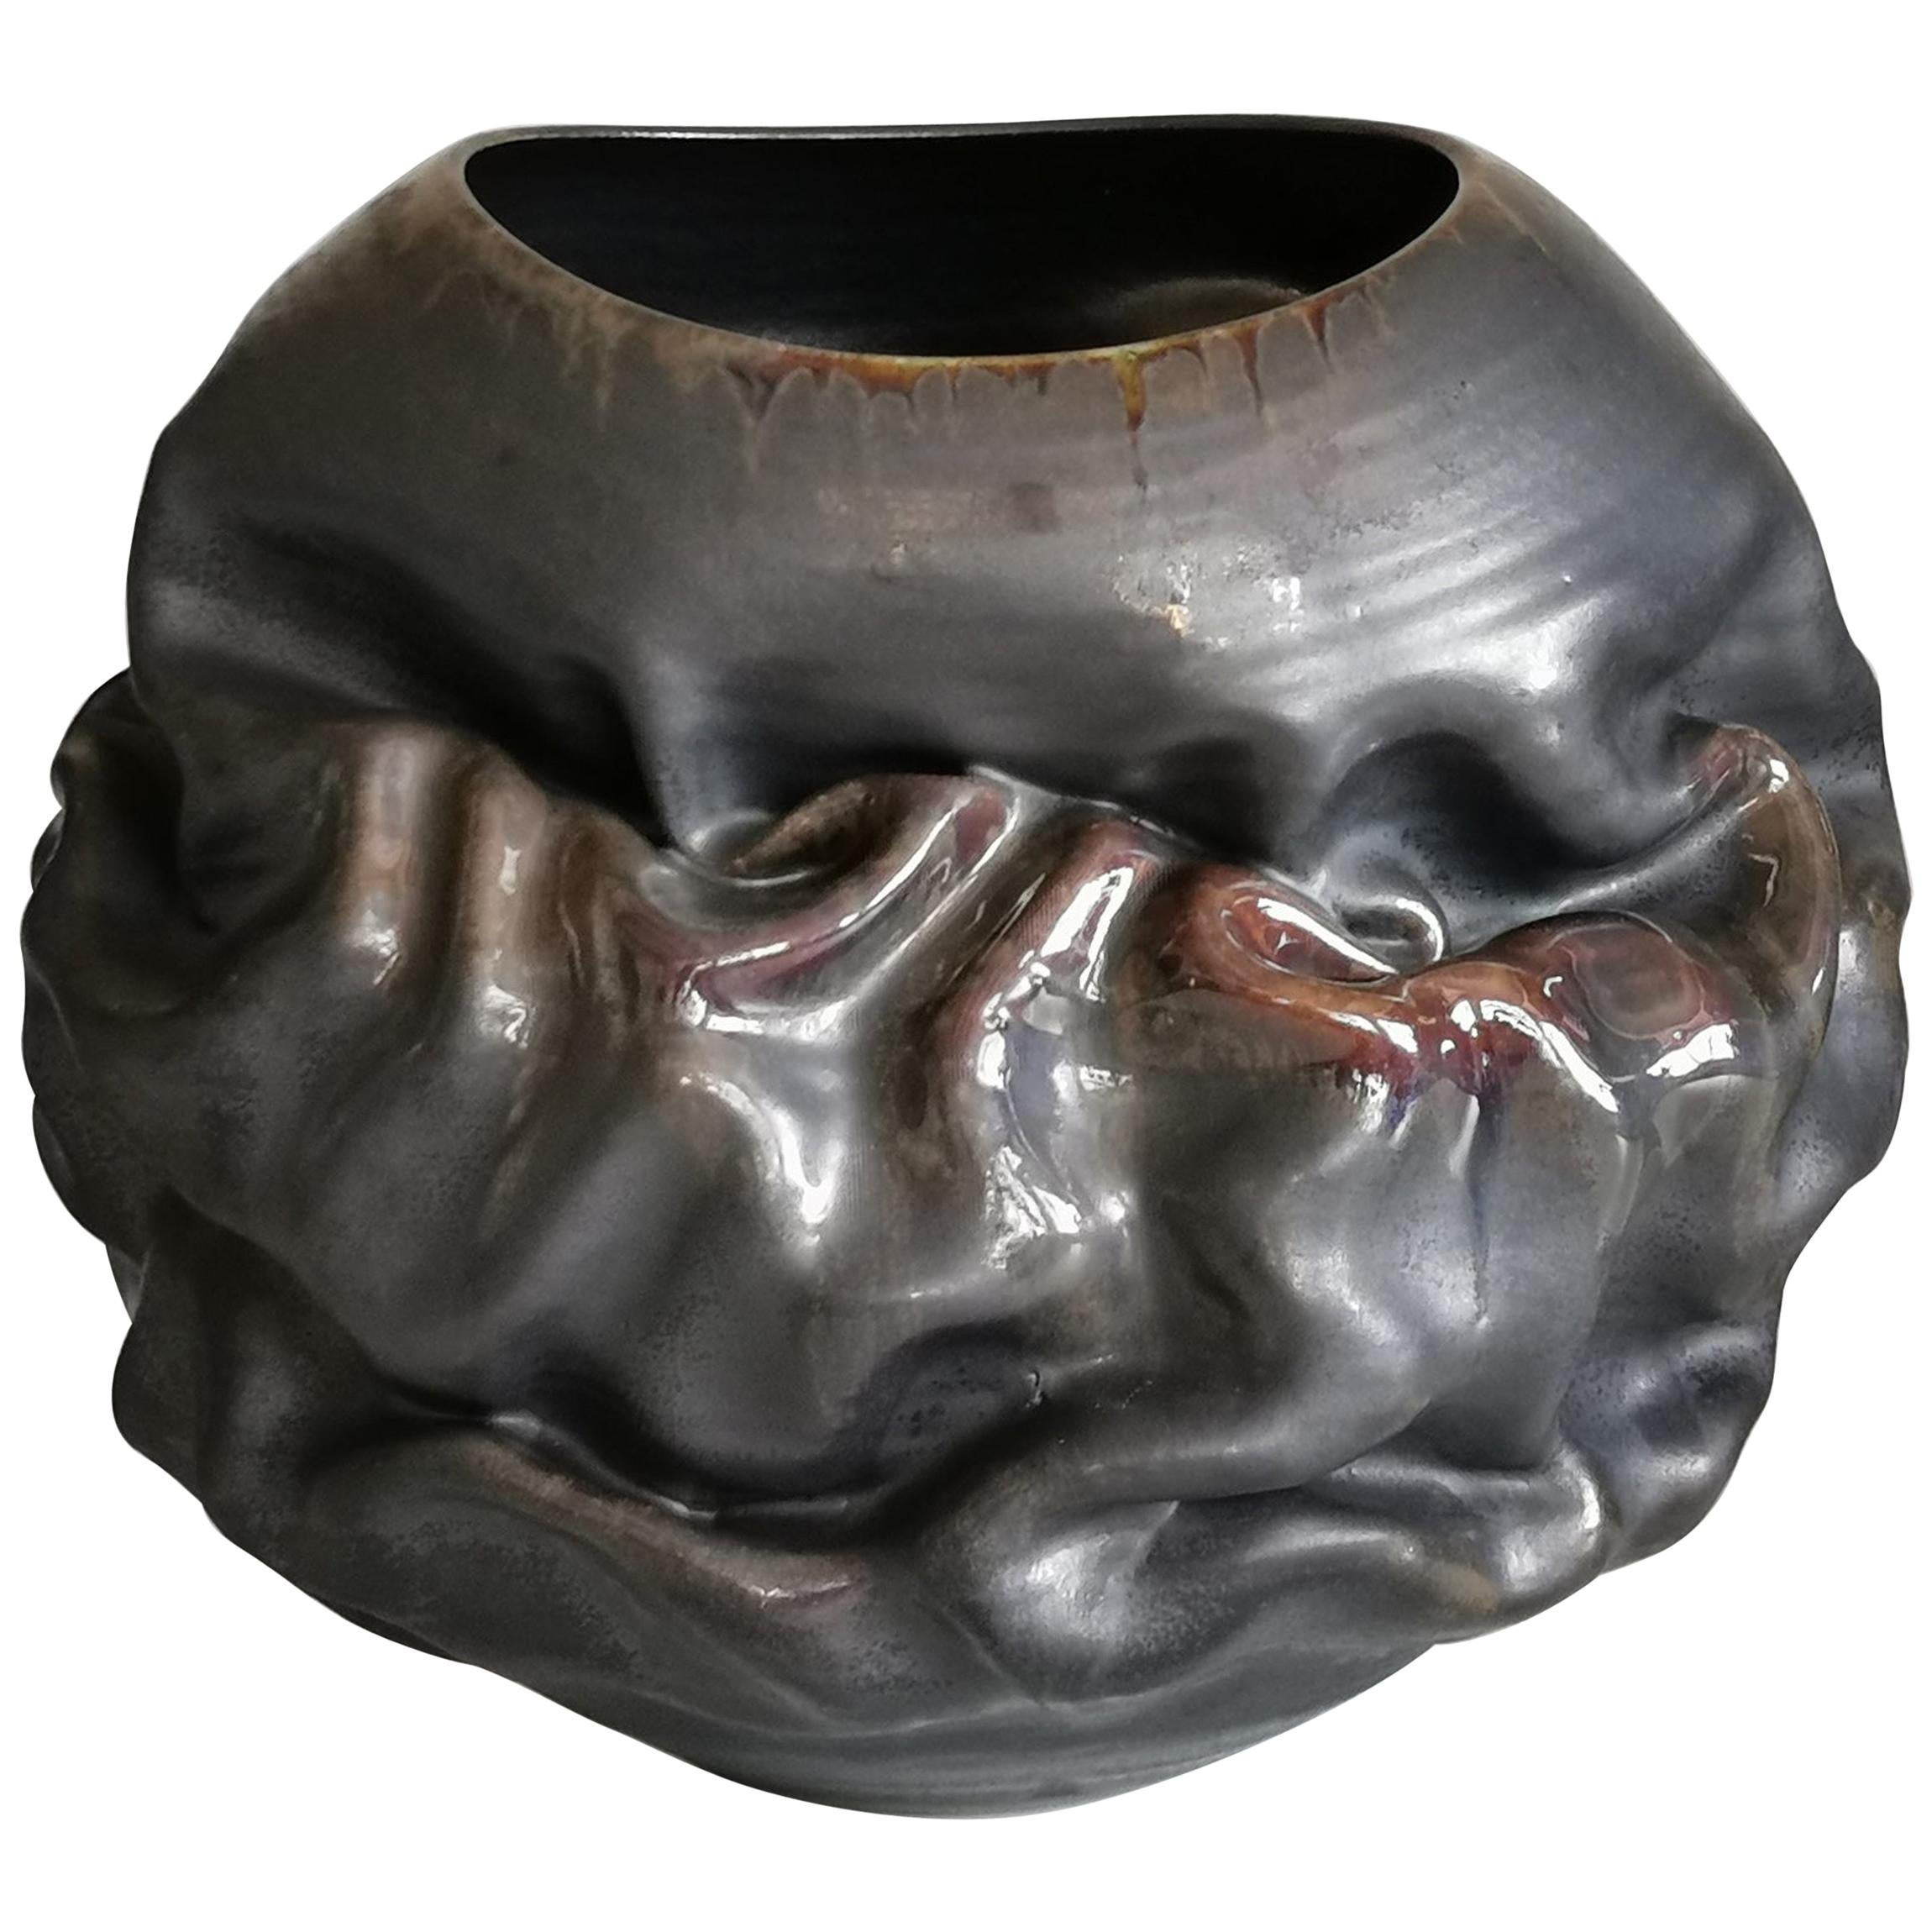 Black Metallic Oval Dehydrated Form, Vase, Interior Sculpture or Vessel, Objet D